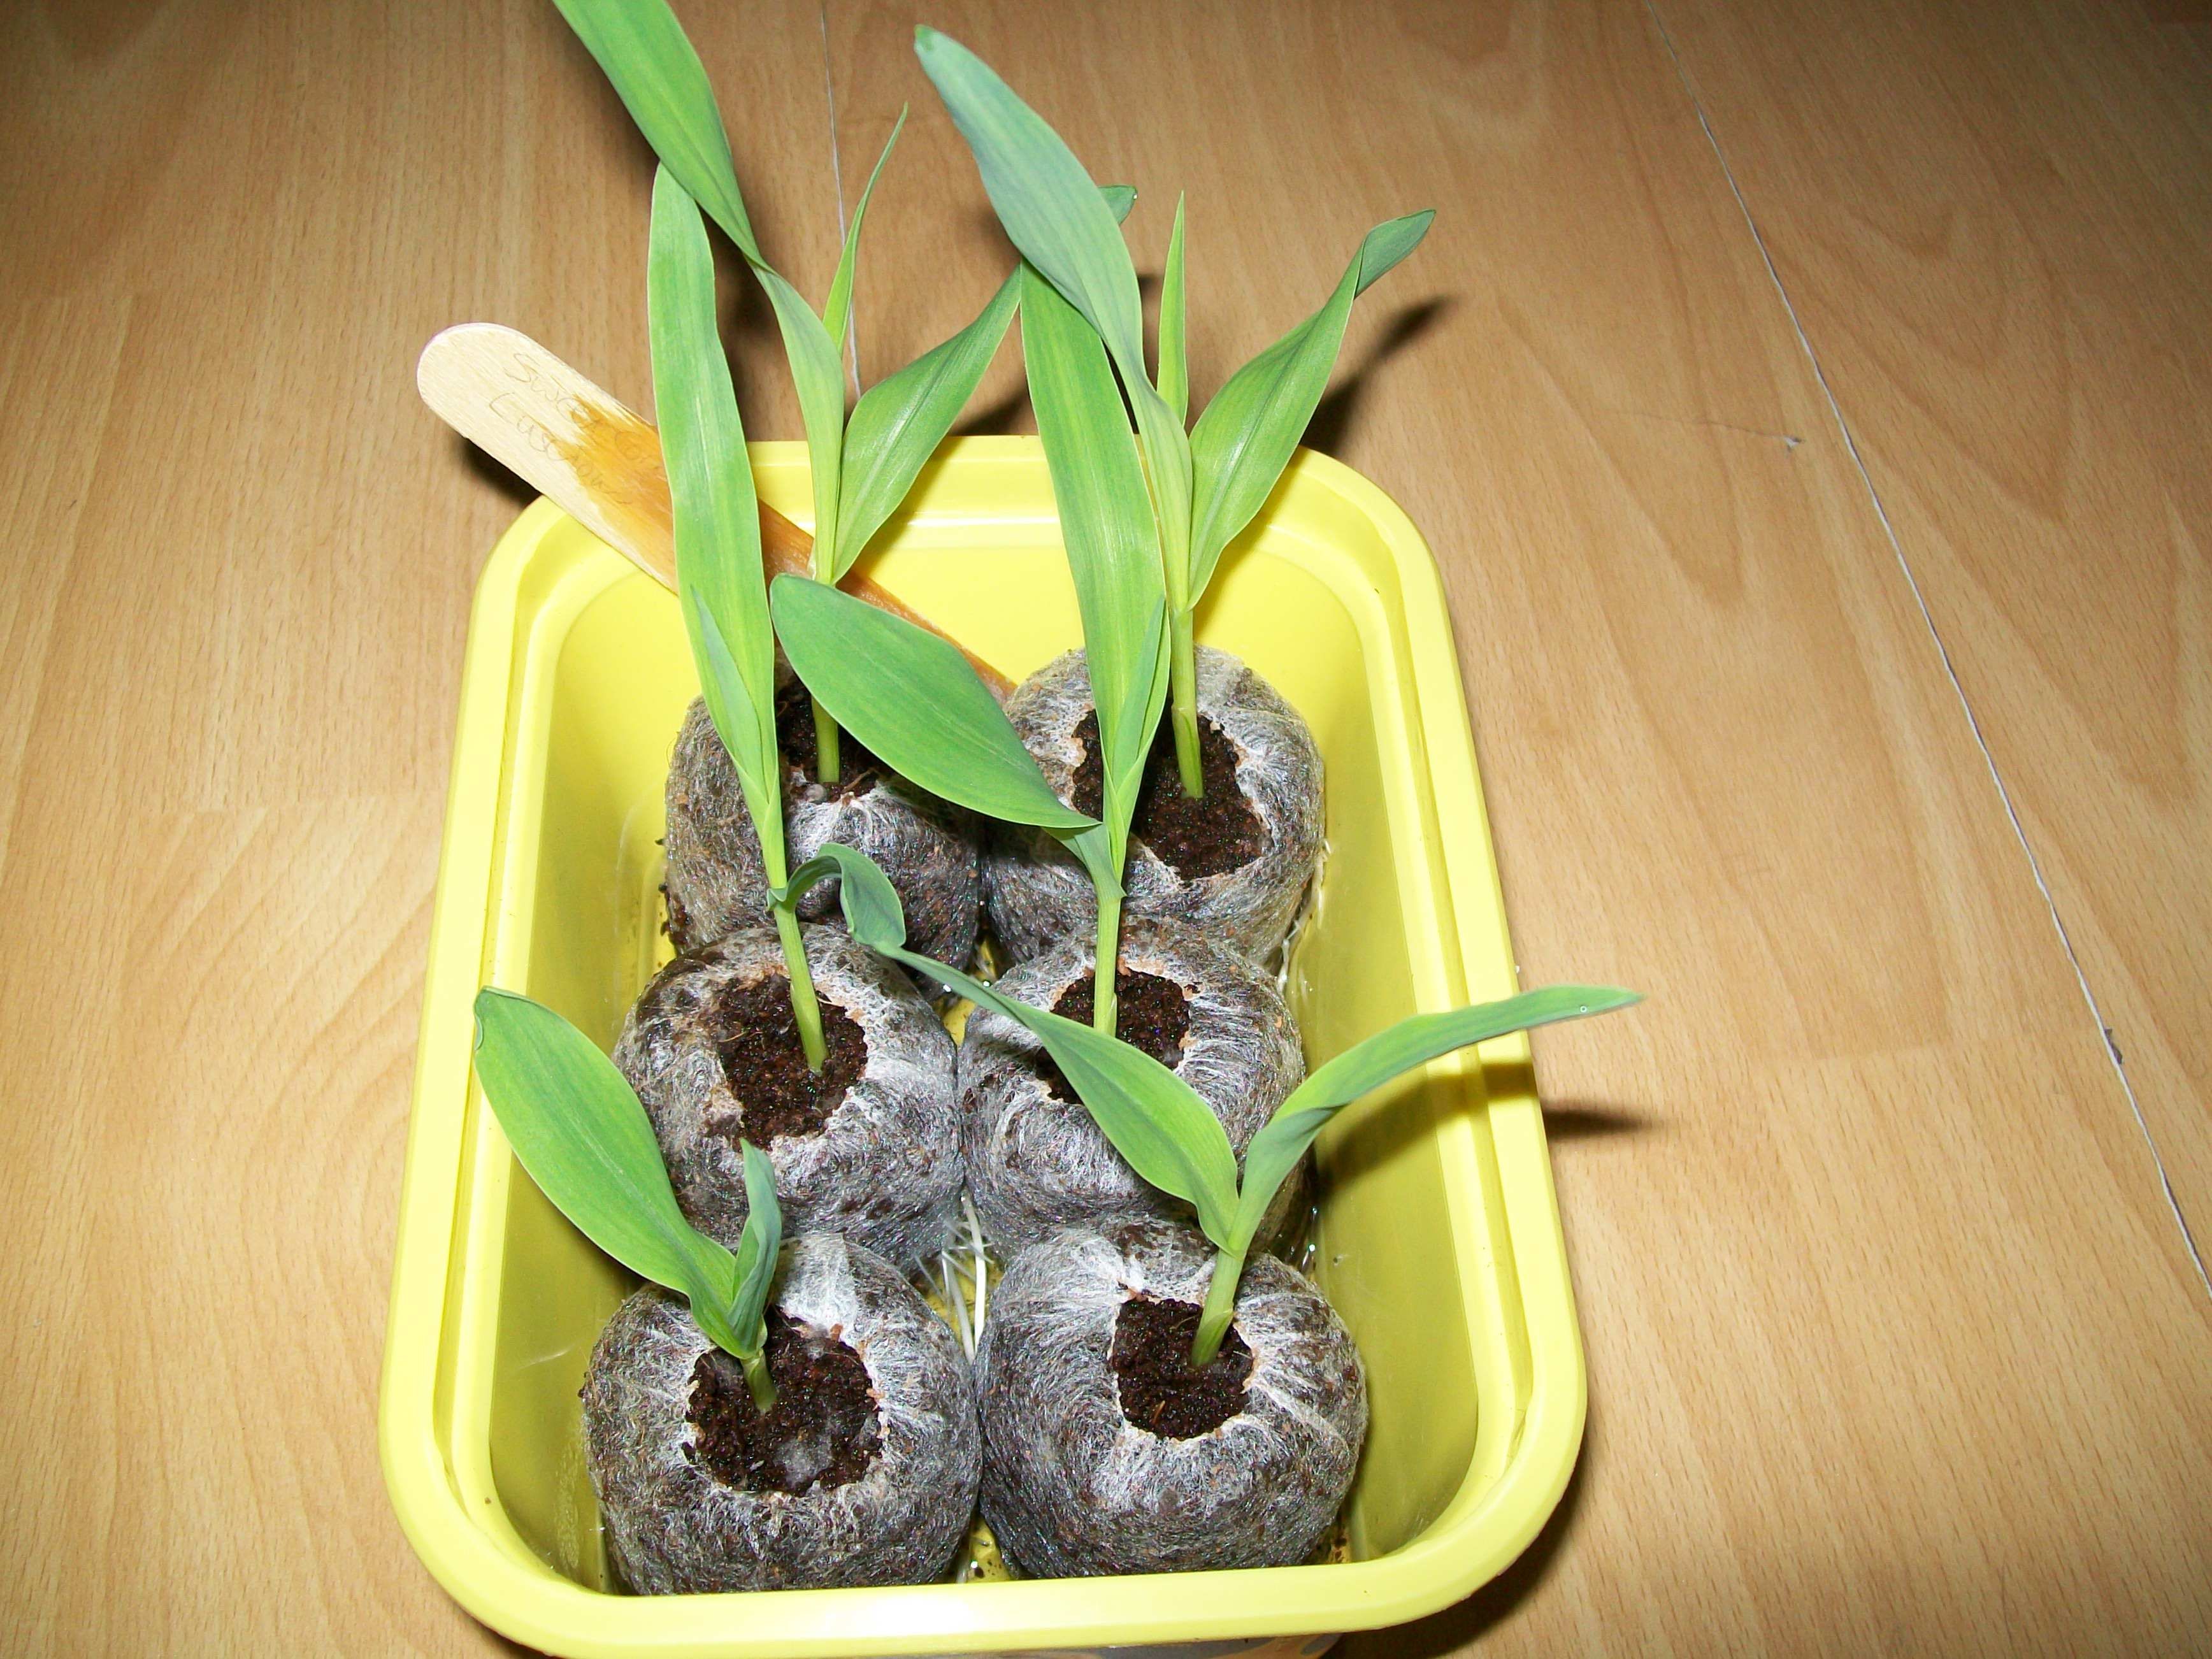 Seedlings from a Peat pellet - ജിഫി പെല്ലറ്റ് ബാഗുകള്‍